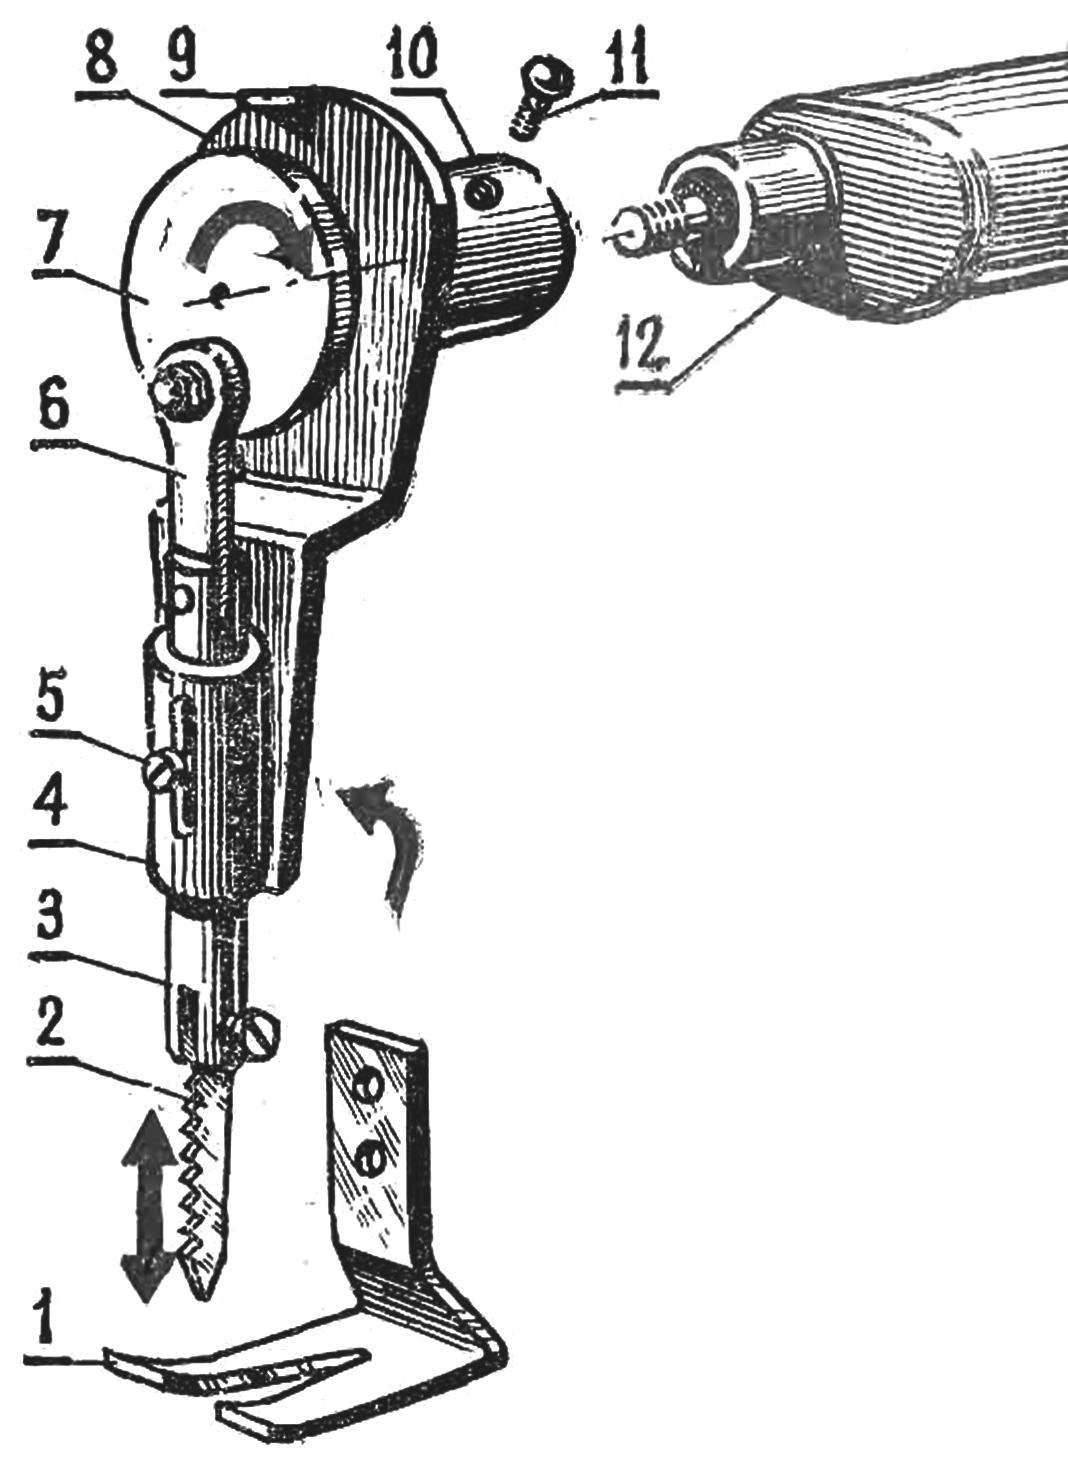 Fig. 2. Details drills-saws